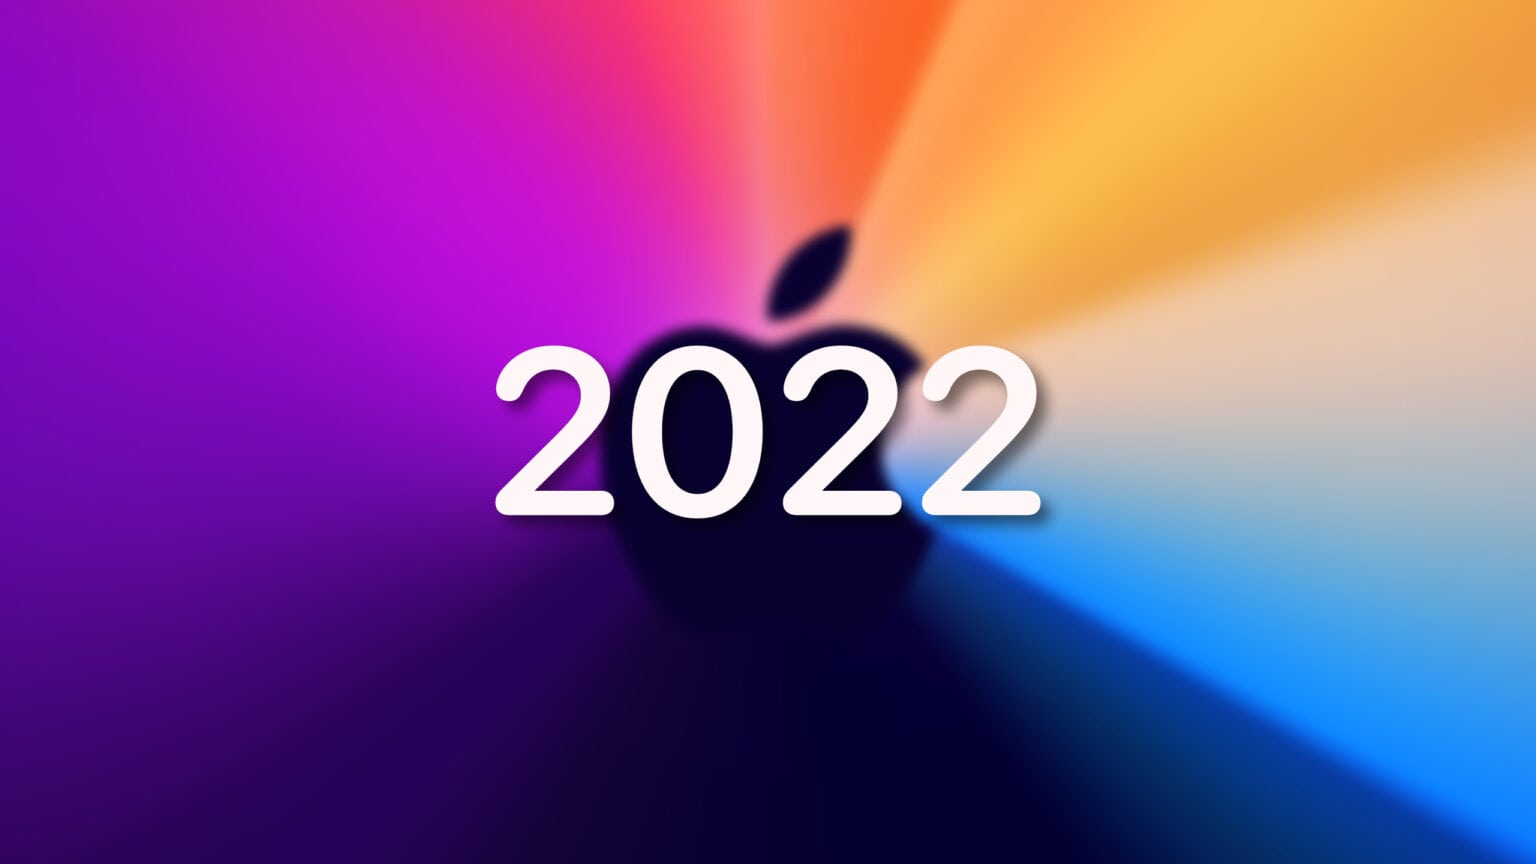 Apple in 2022